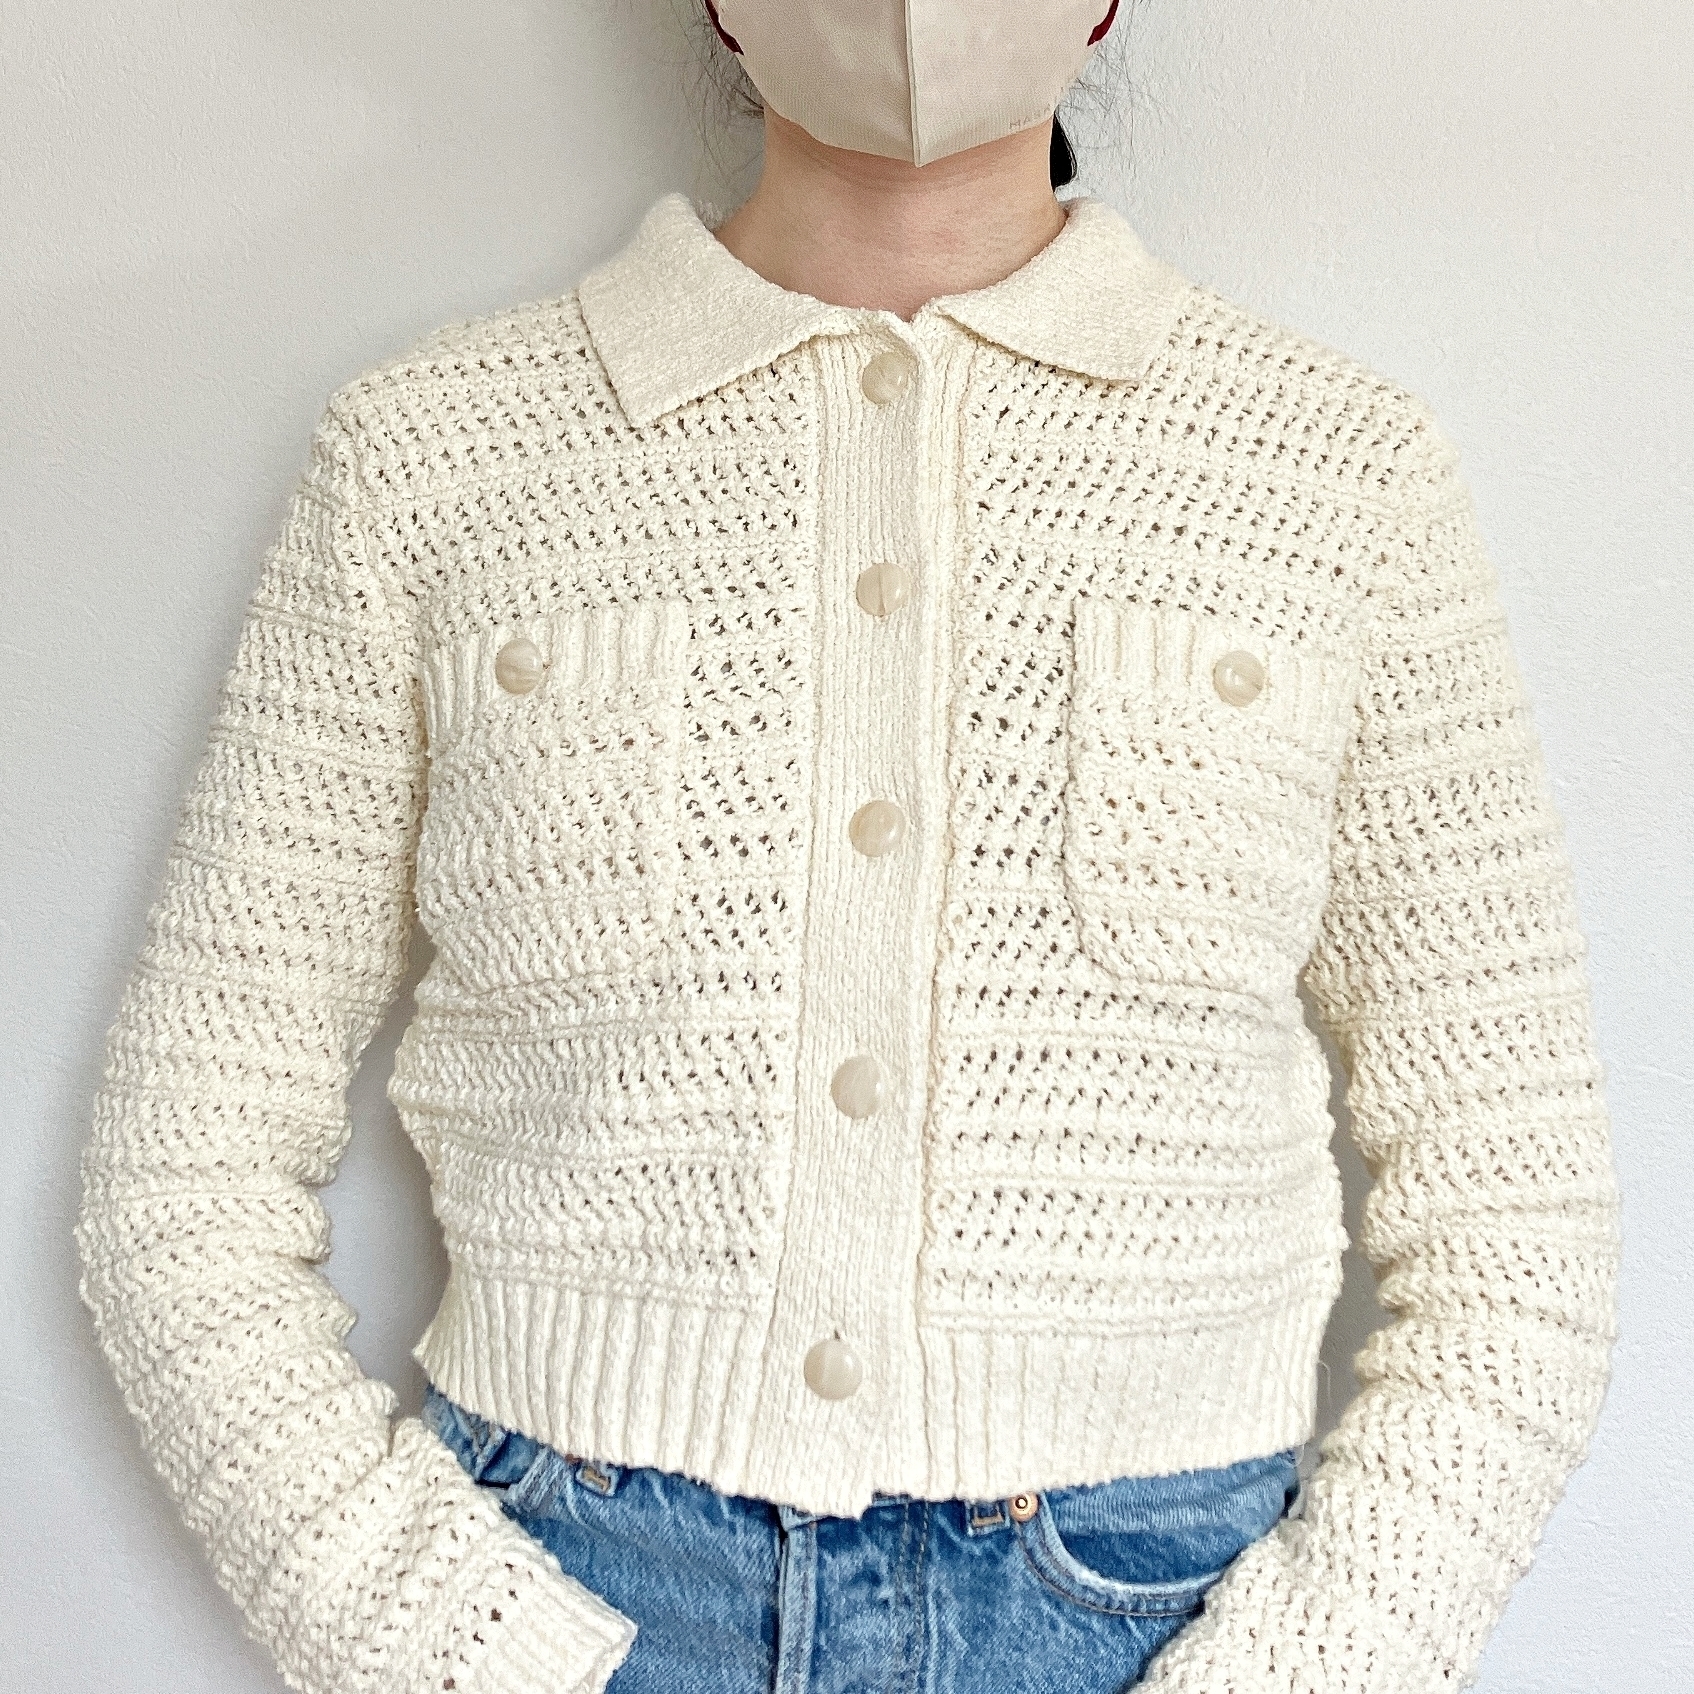 GU（ジーユー）のオススメファッションアイテム「ブークレニットジャケット（長袖）+E」